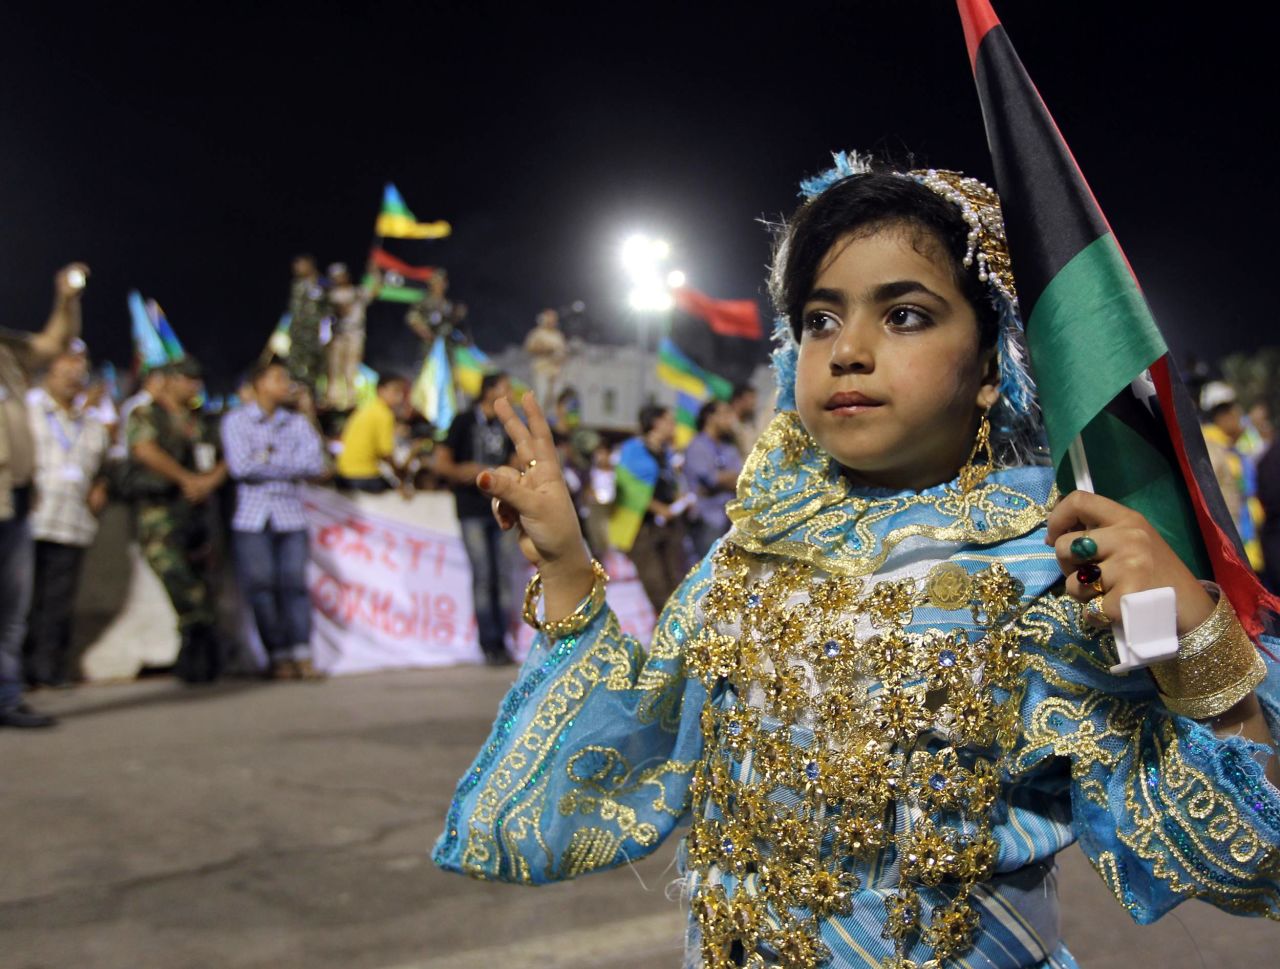 A Berber girl dressed in traditional attire at a Berber cultural festival in Tripoli. Public displays of Amazigh culture were forbidden under the Gadhafi regime.